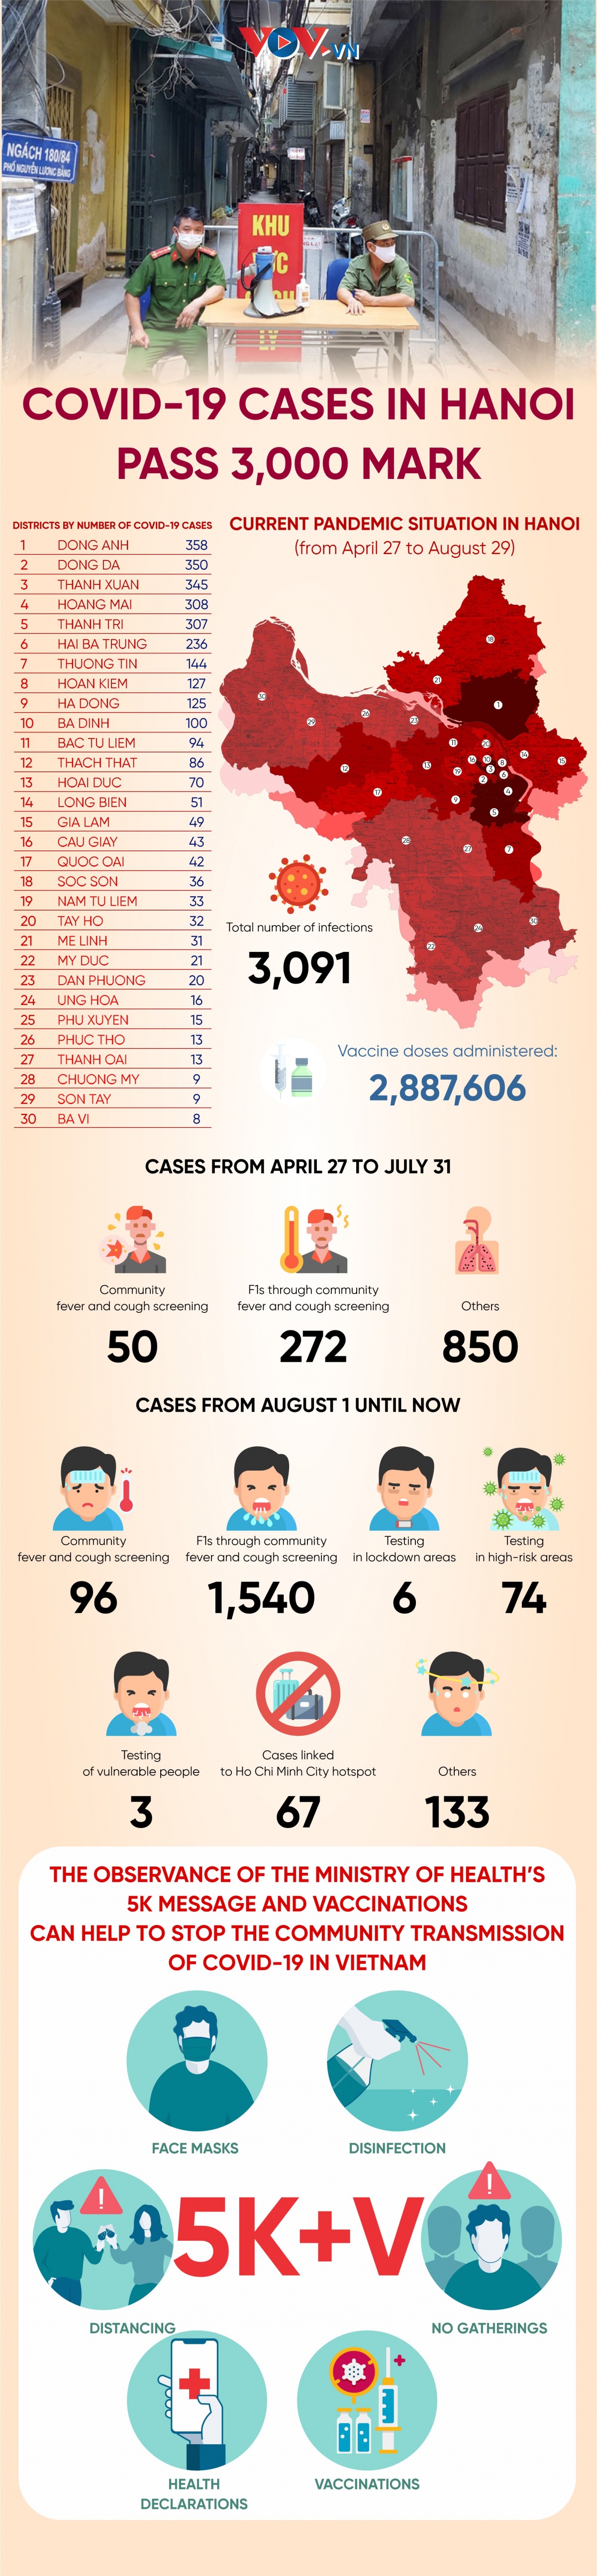 covid-19 cases in hanoi pass 3,000 mark picture 1